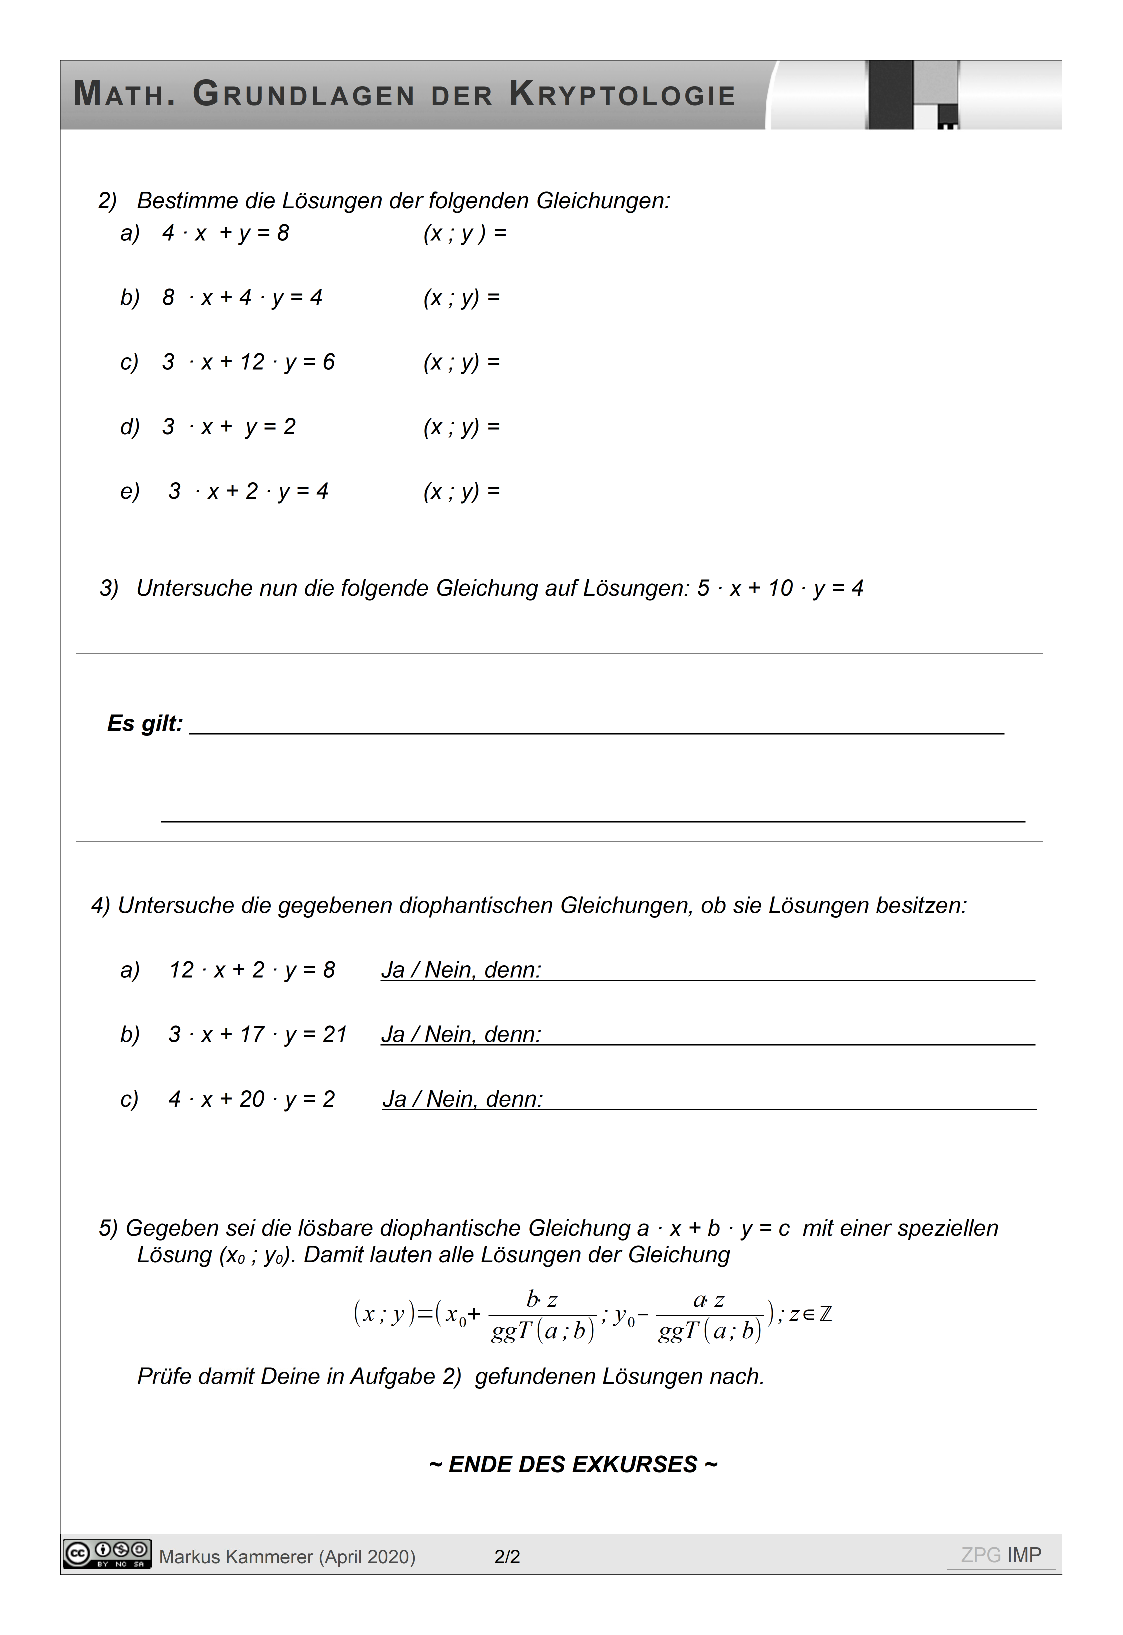 Diophantische Gleichung, Seite 2